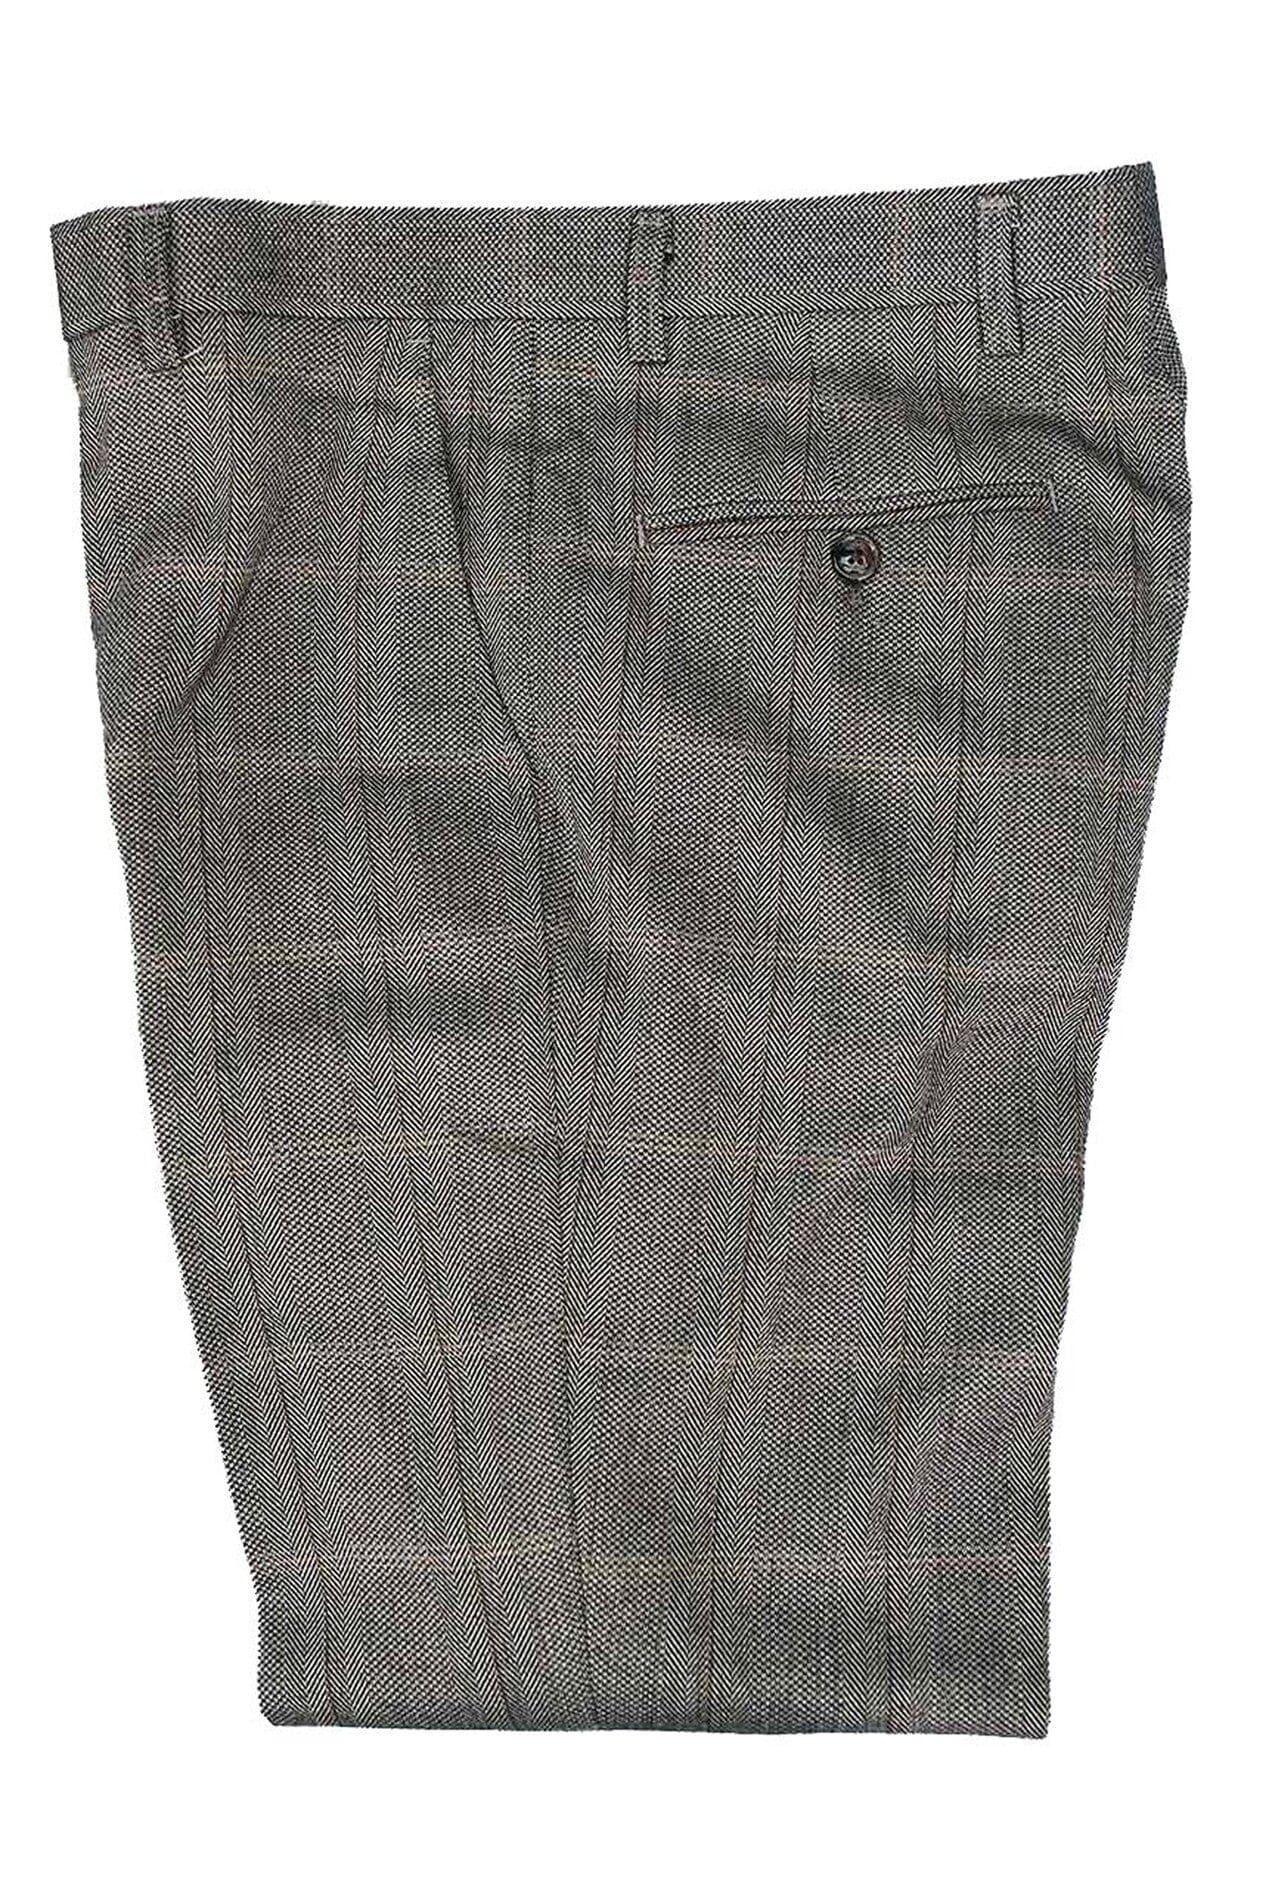 Herringbone Check Brown Tweed Trousers - STOCK CLEARANCE - Trousers - 36R - THREADPEPPER